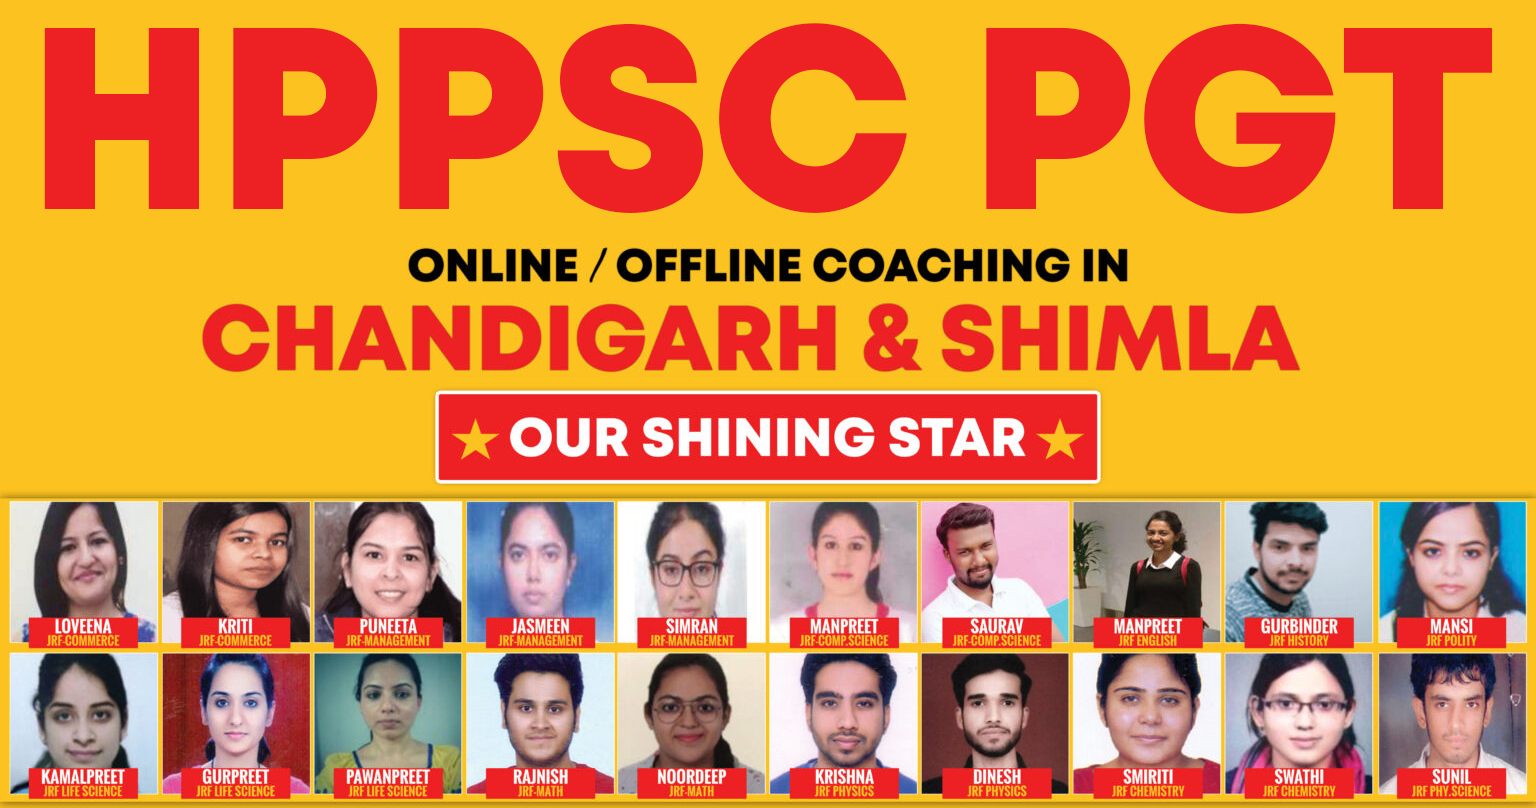 HPPSC PGT SHINING STAR